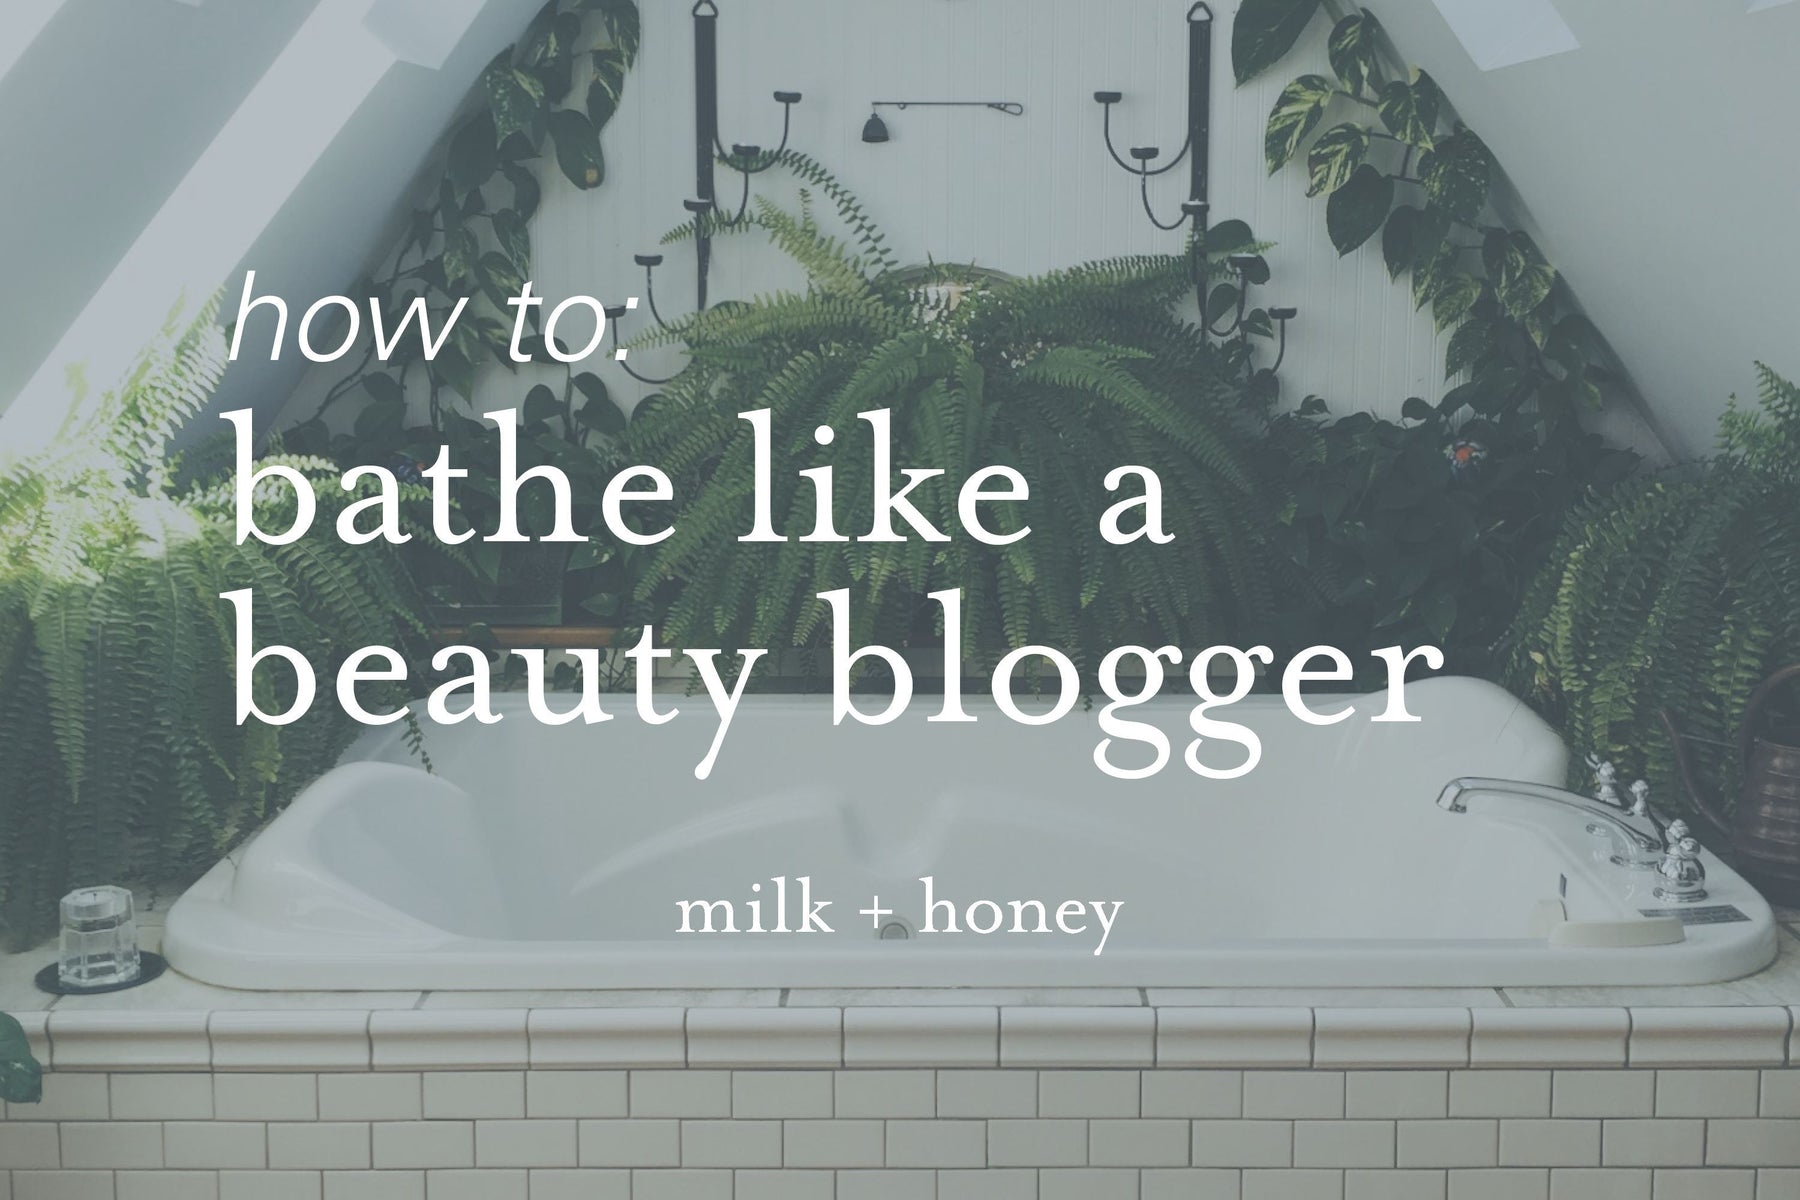 Five-sensory bath, curated by an Instagram beauty blogger | #ArtOfTheBath